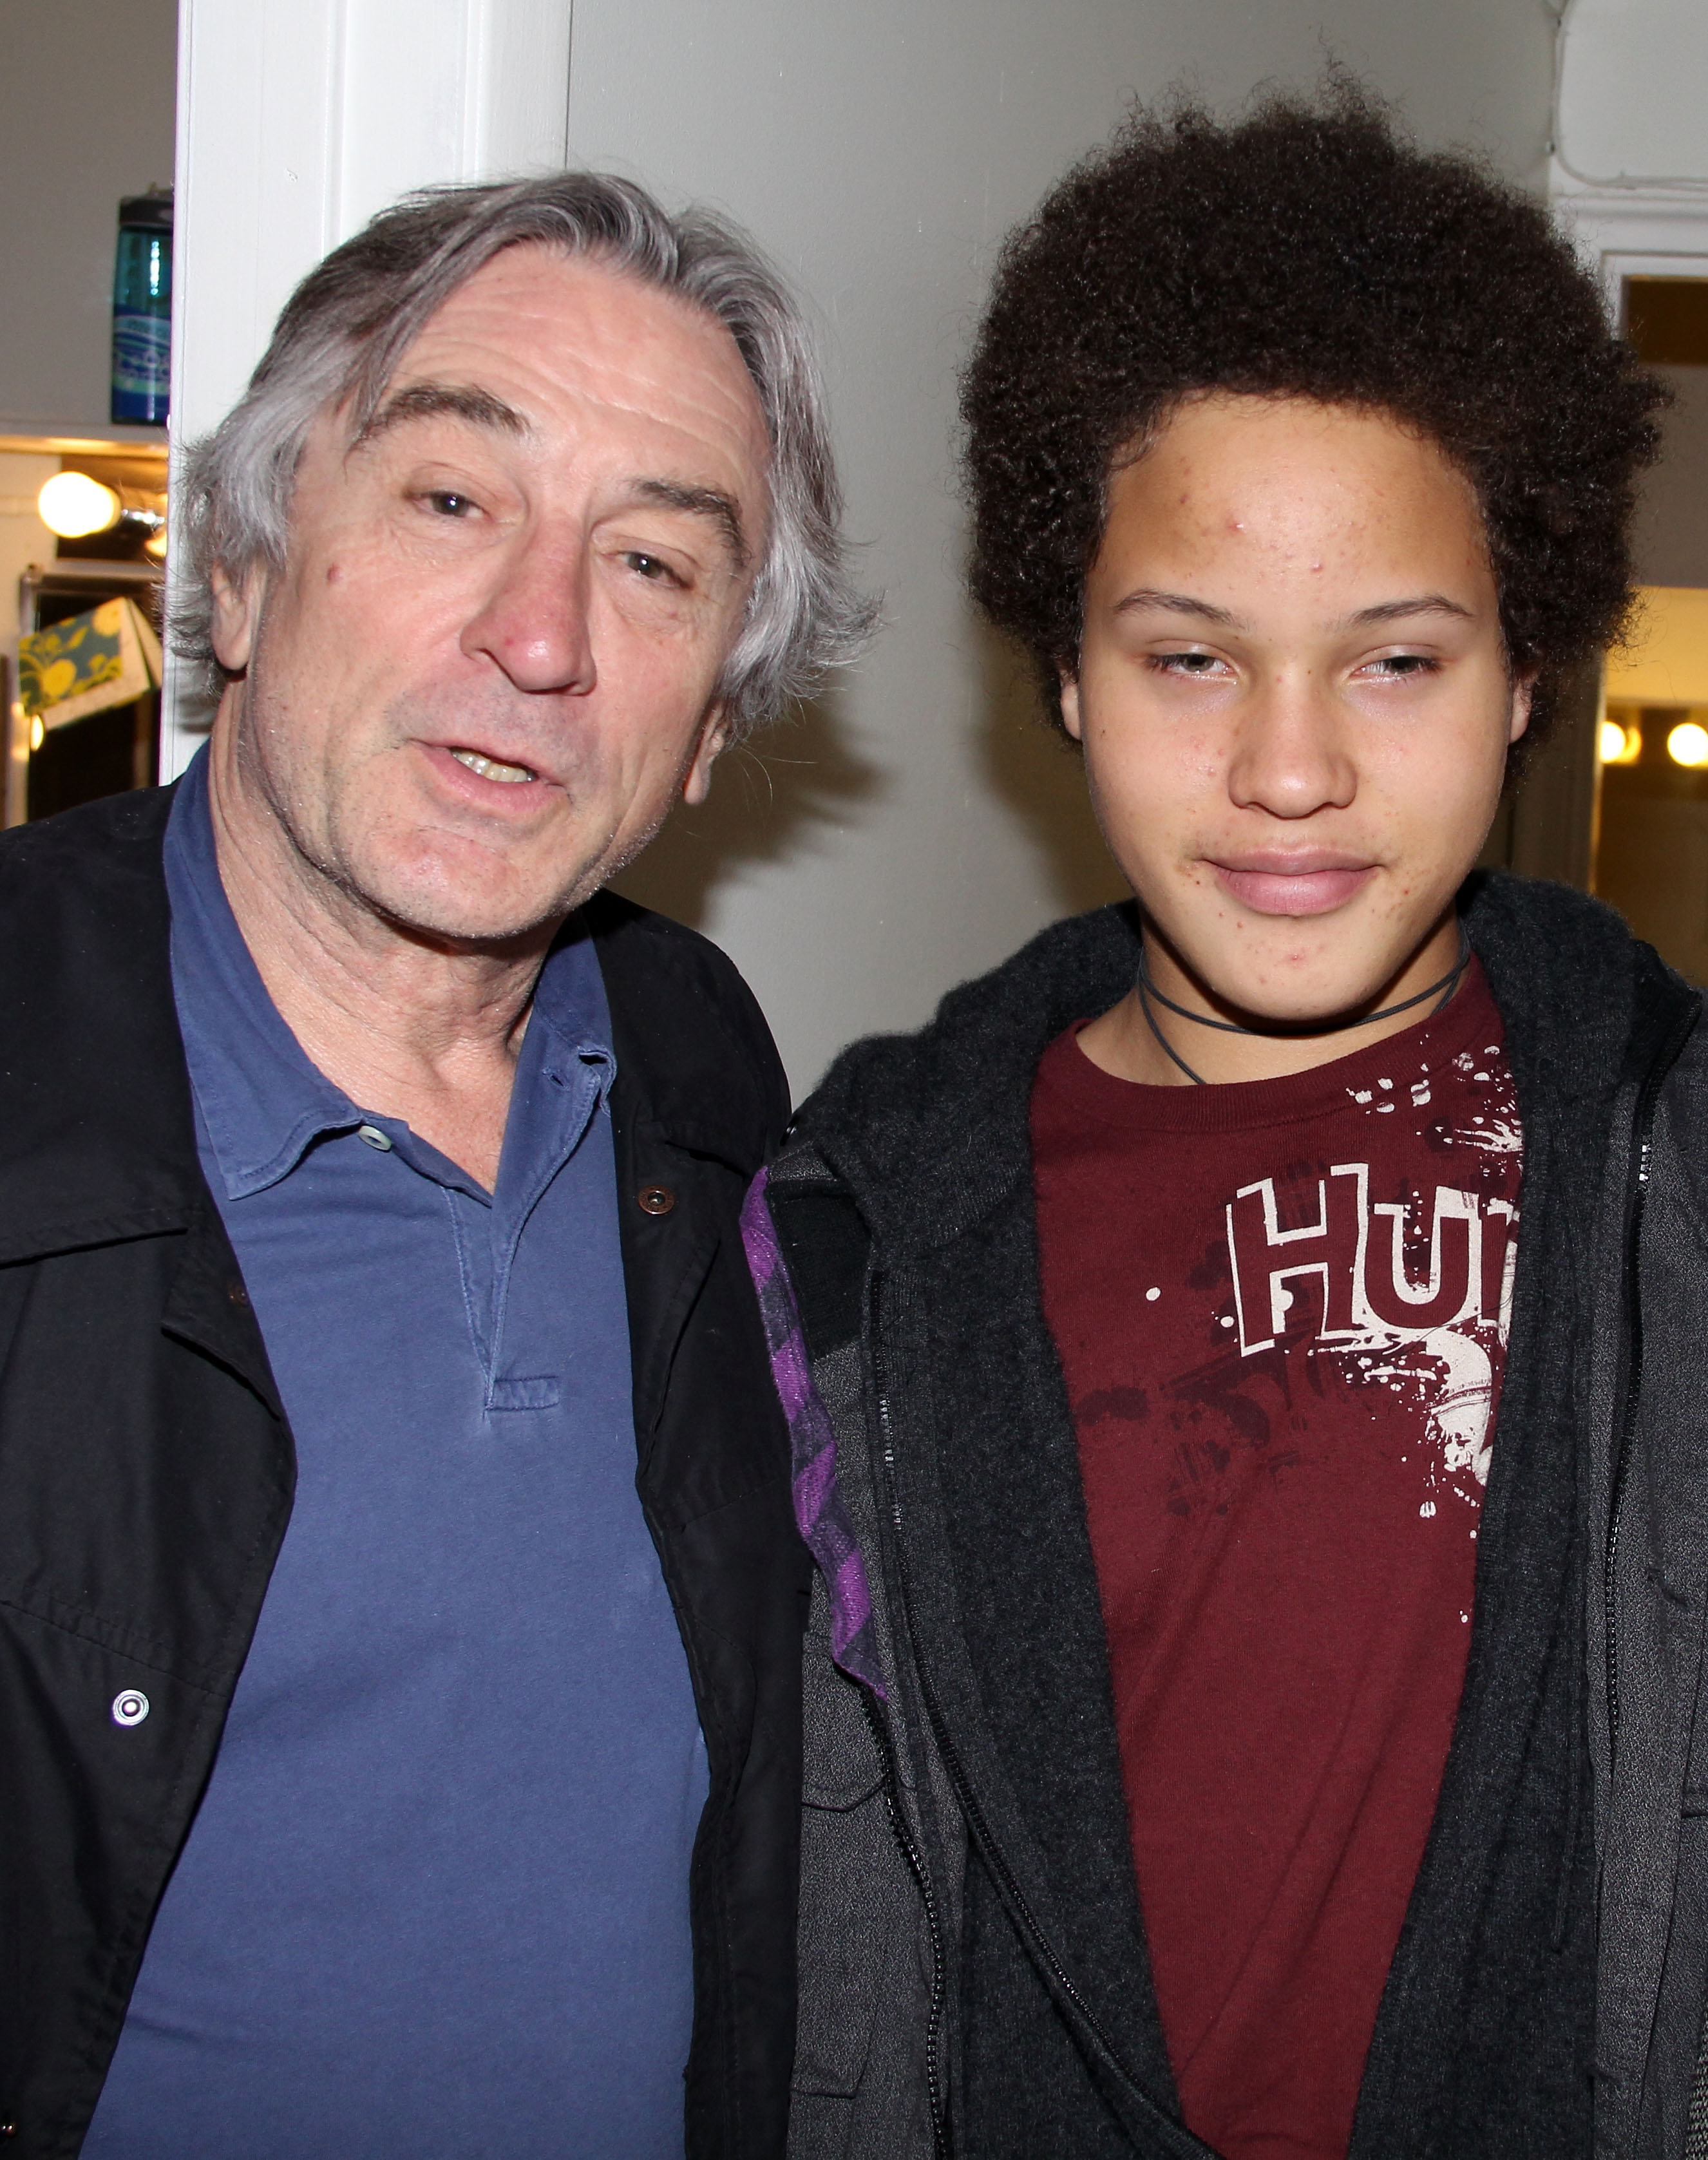 Robert De Niro mit Sohn Julien im Richard Rogers Theater am 24. April 2011 in New York City. | Quelle: Getty Images